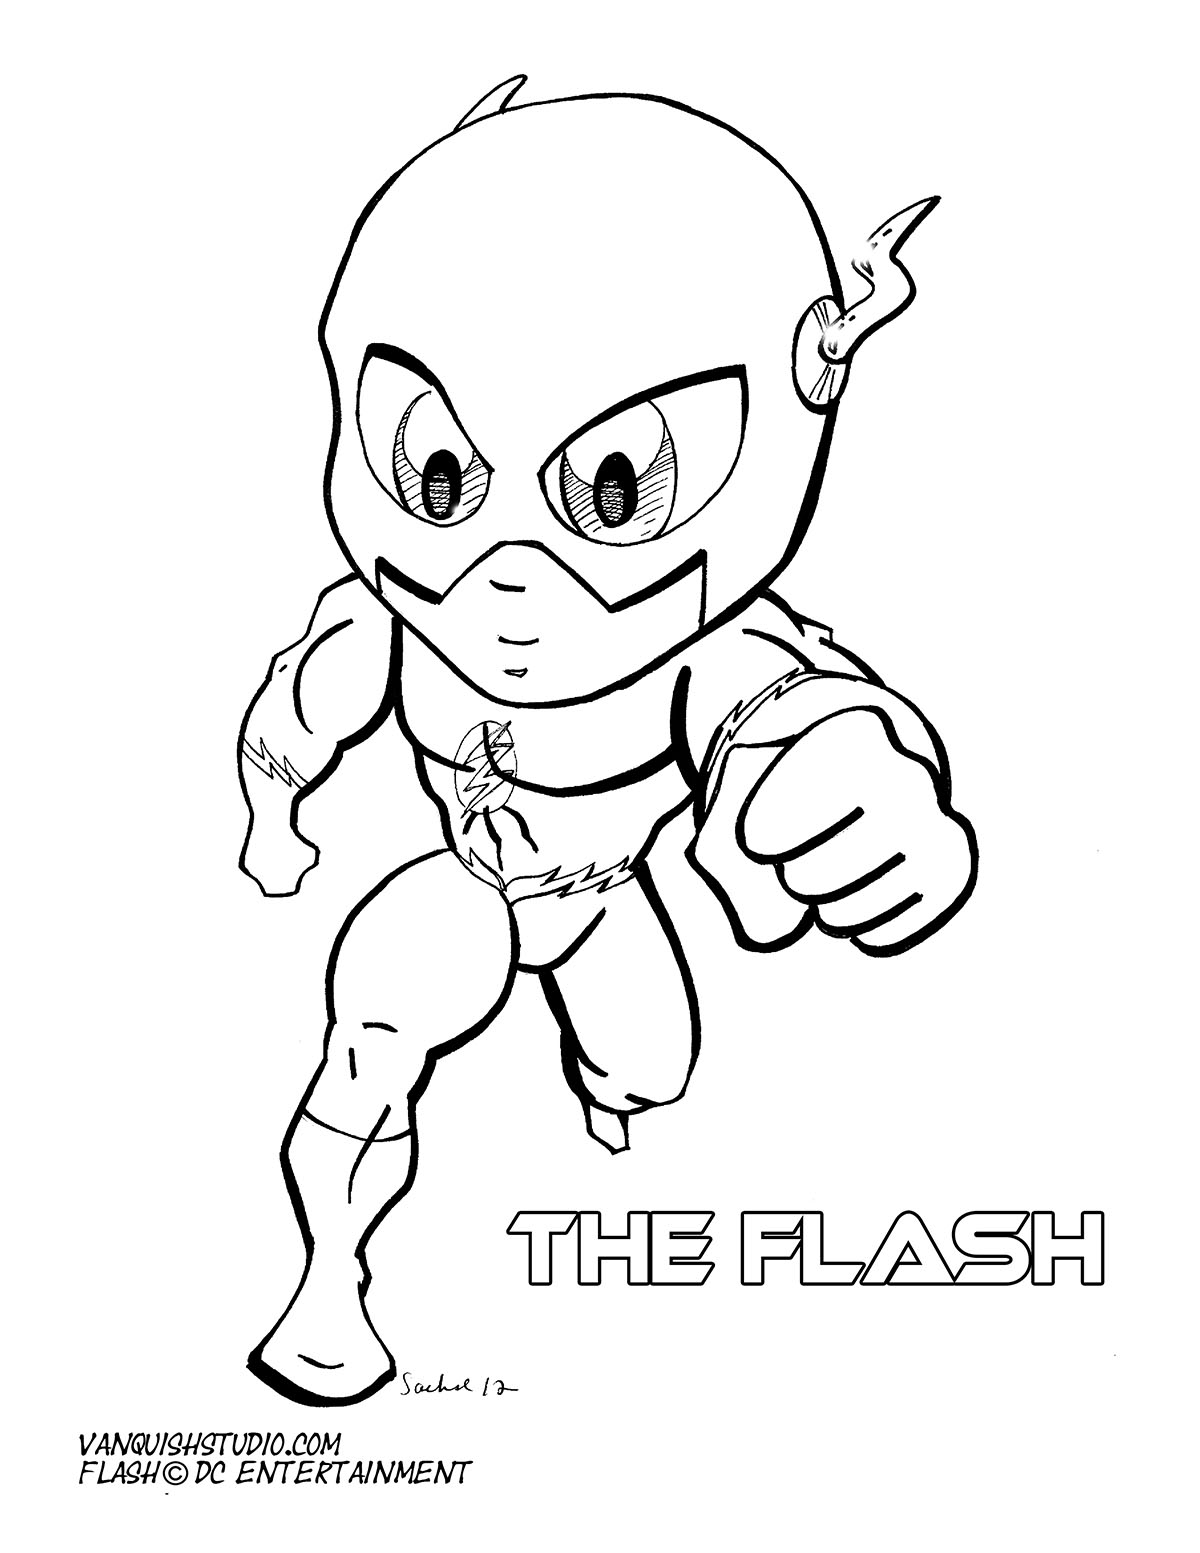 New coloring page â flash vanquish studio